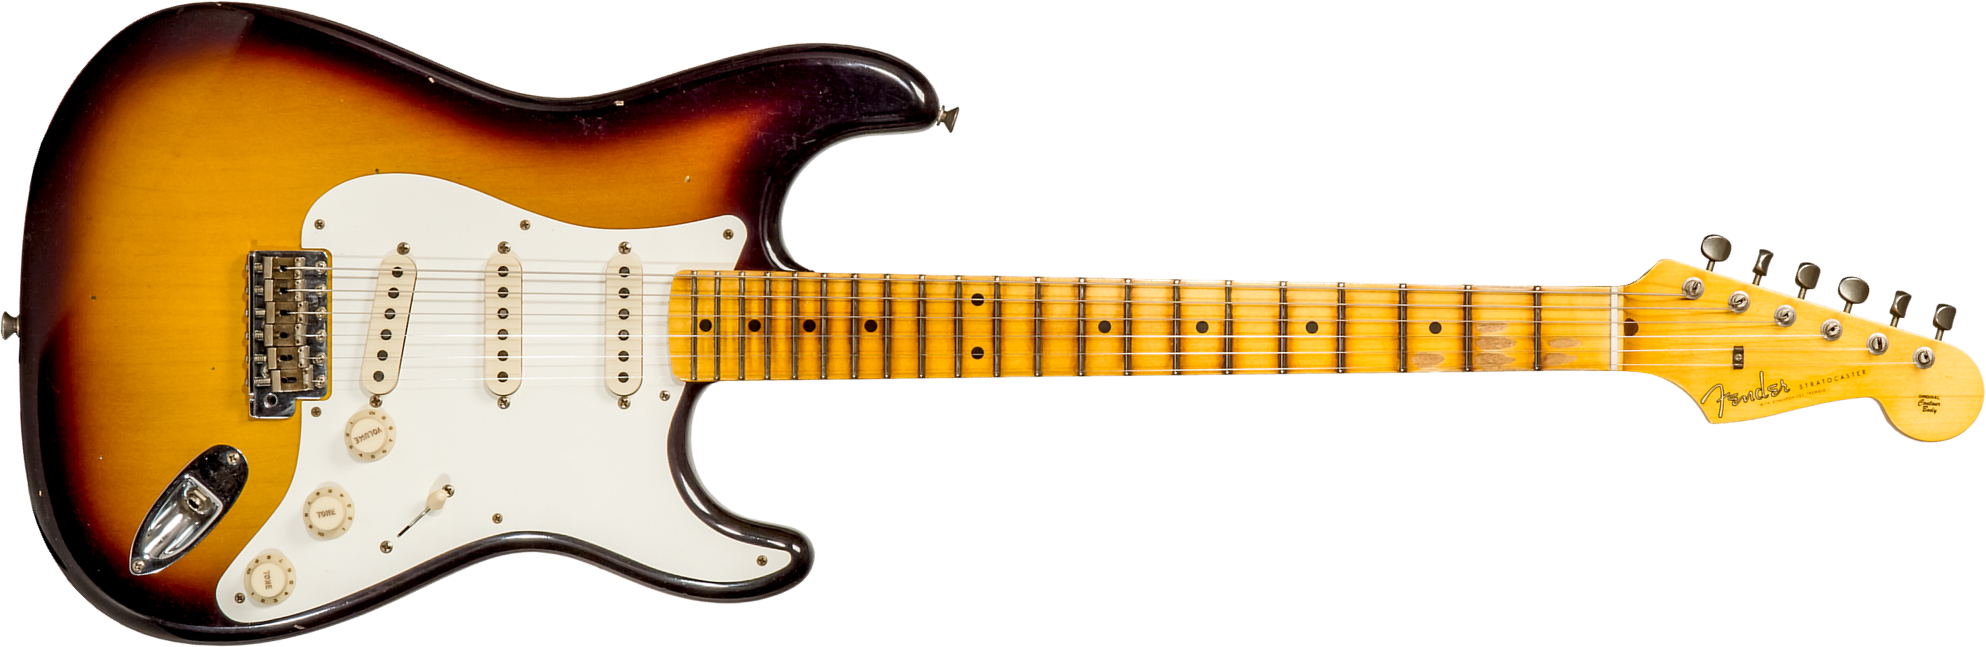 Fender Custom Shop Strat 1956 3s Trem Mn #cz570281 - Journeyman Relic Aged 2-color Sunburst - E-Gitarre in Str-Form - Main picture